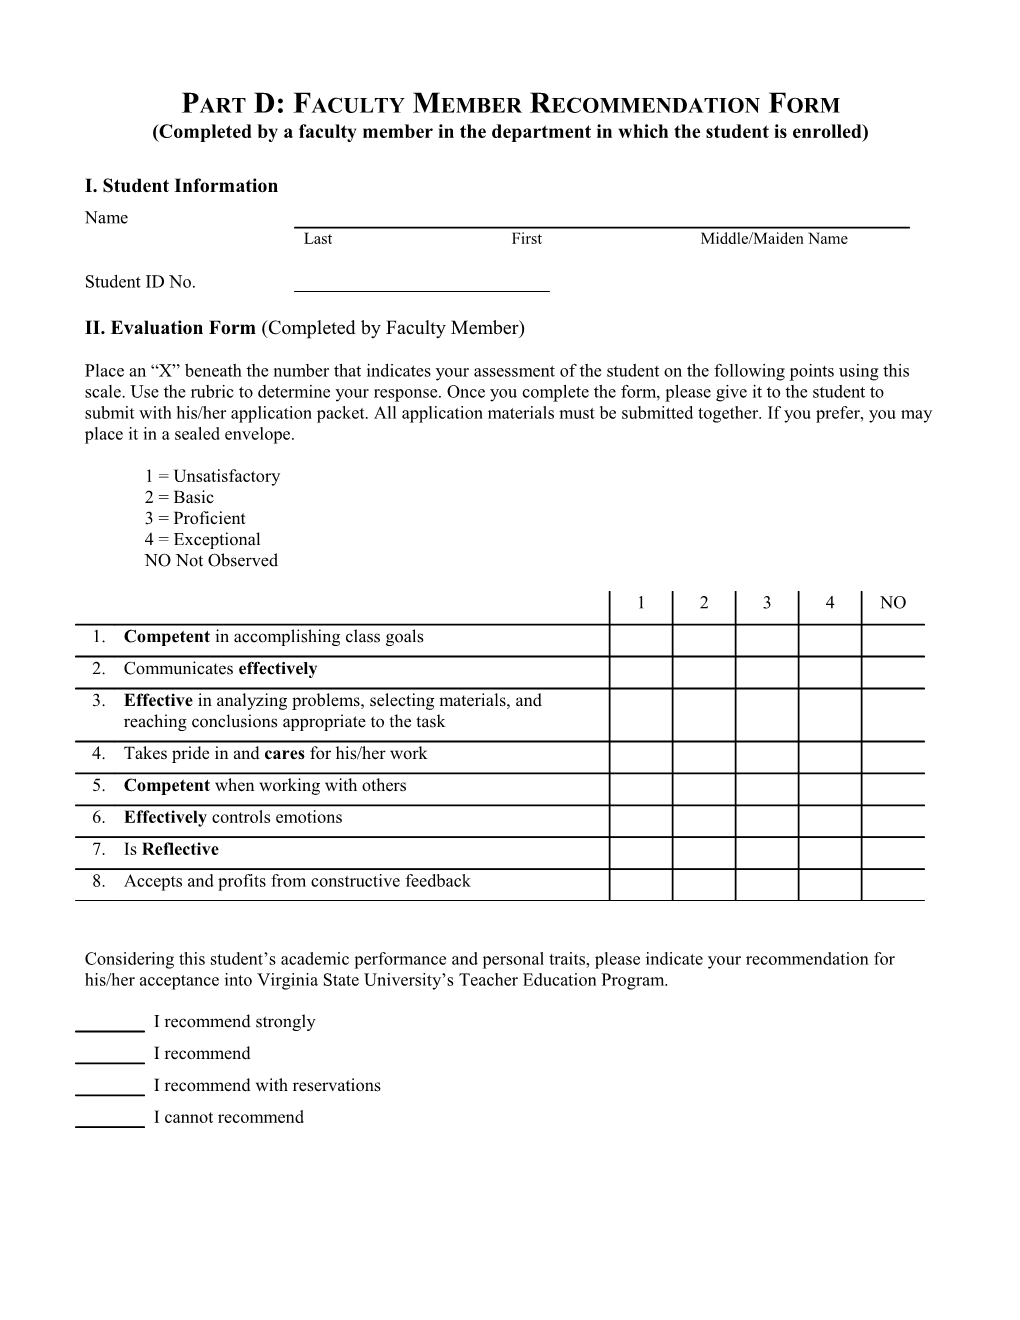 Part D: Faculty Member Recommendation Form